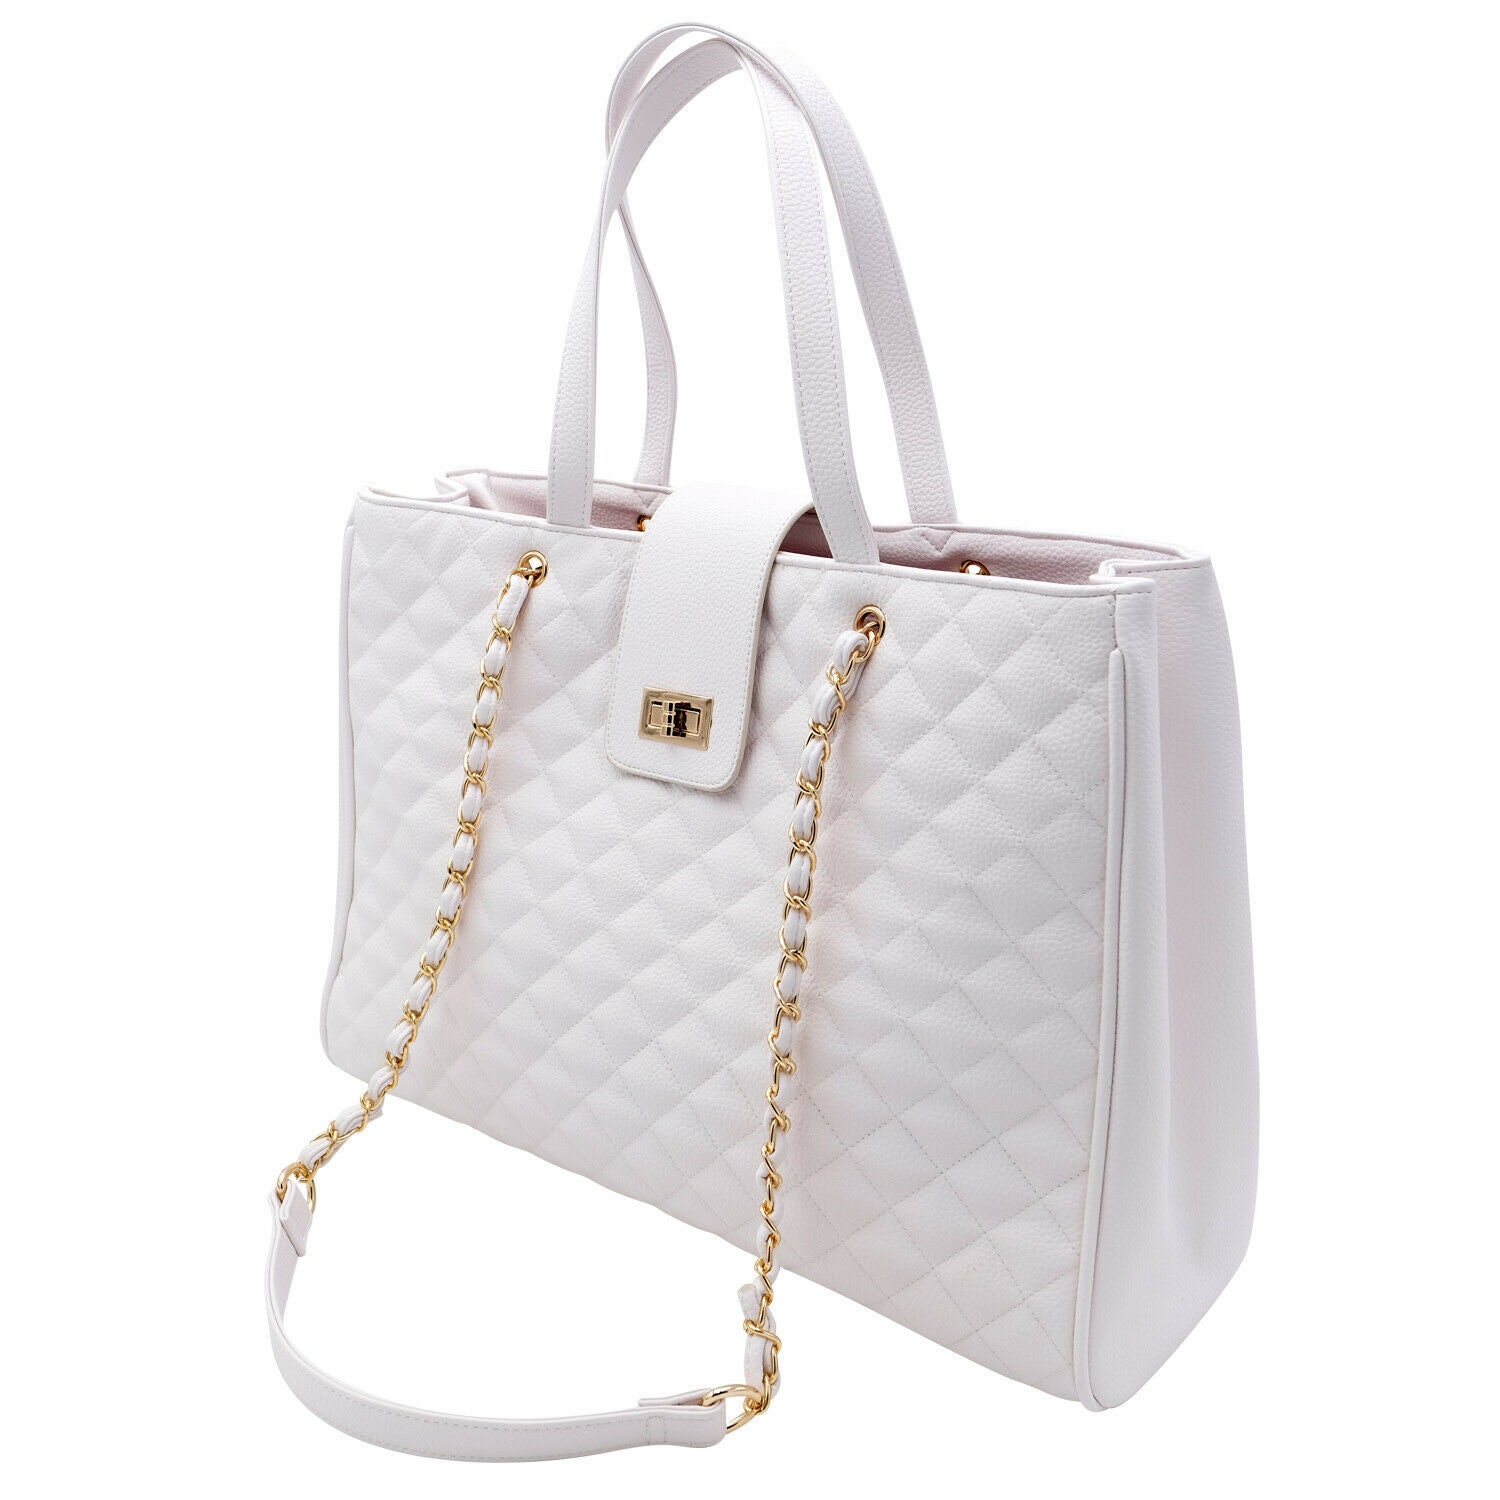 Women's Handbag | Tote Shoulder Bags (Laptop Bag/ Office Bag/ College Bag)